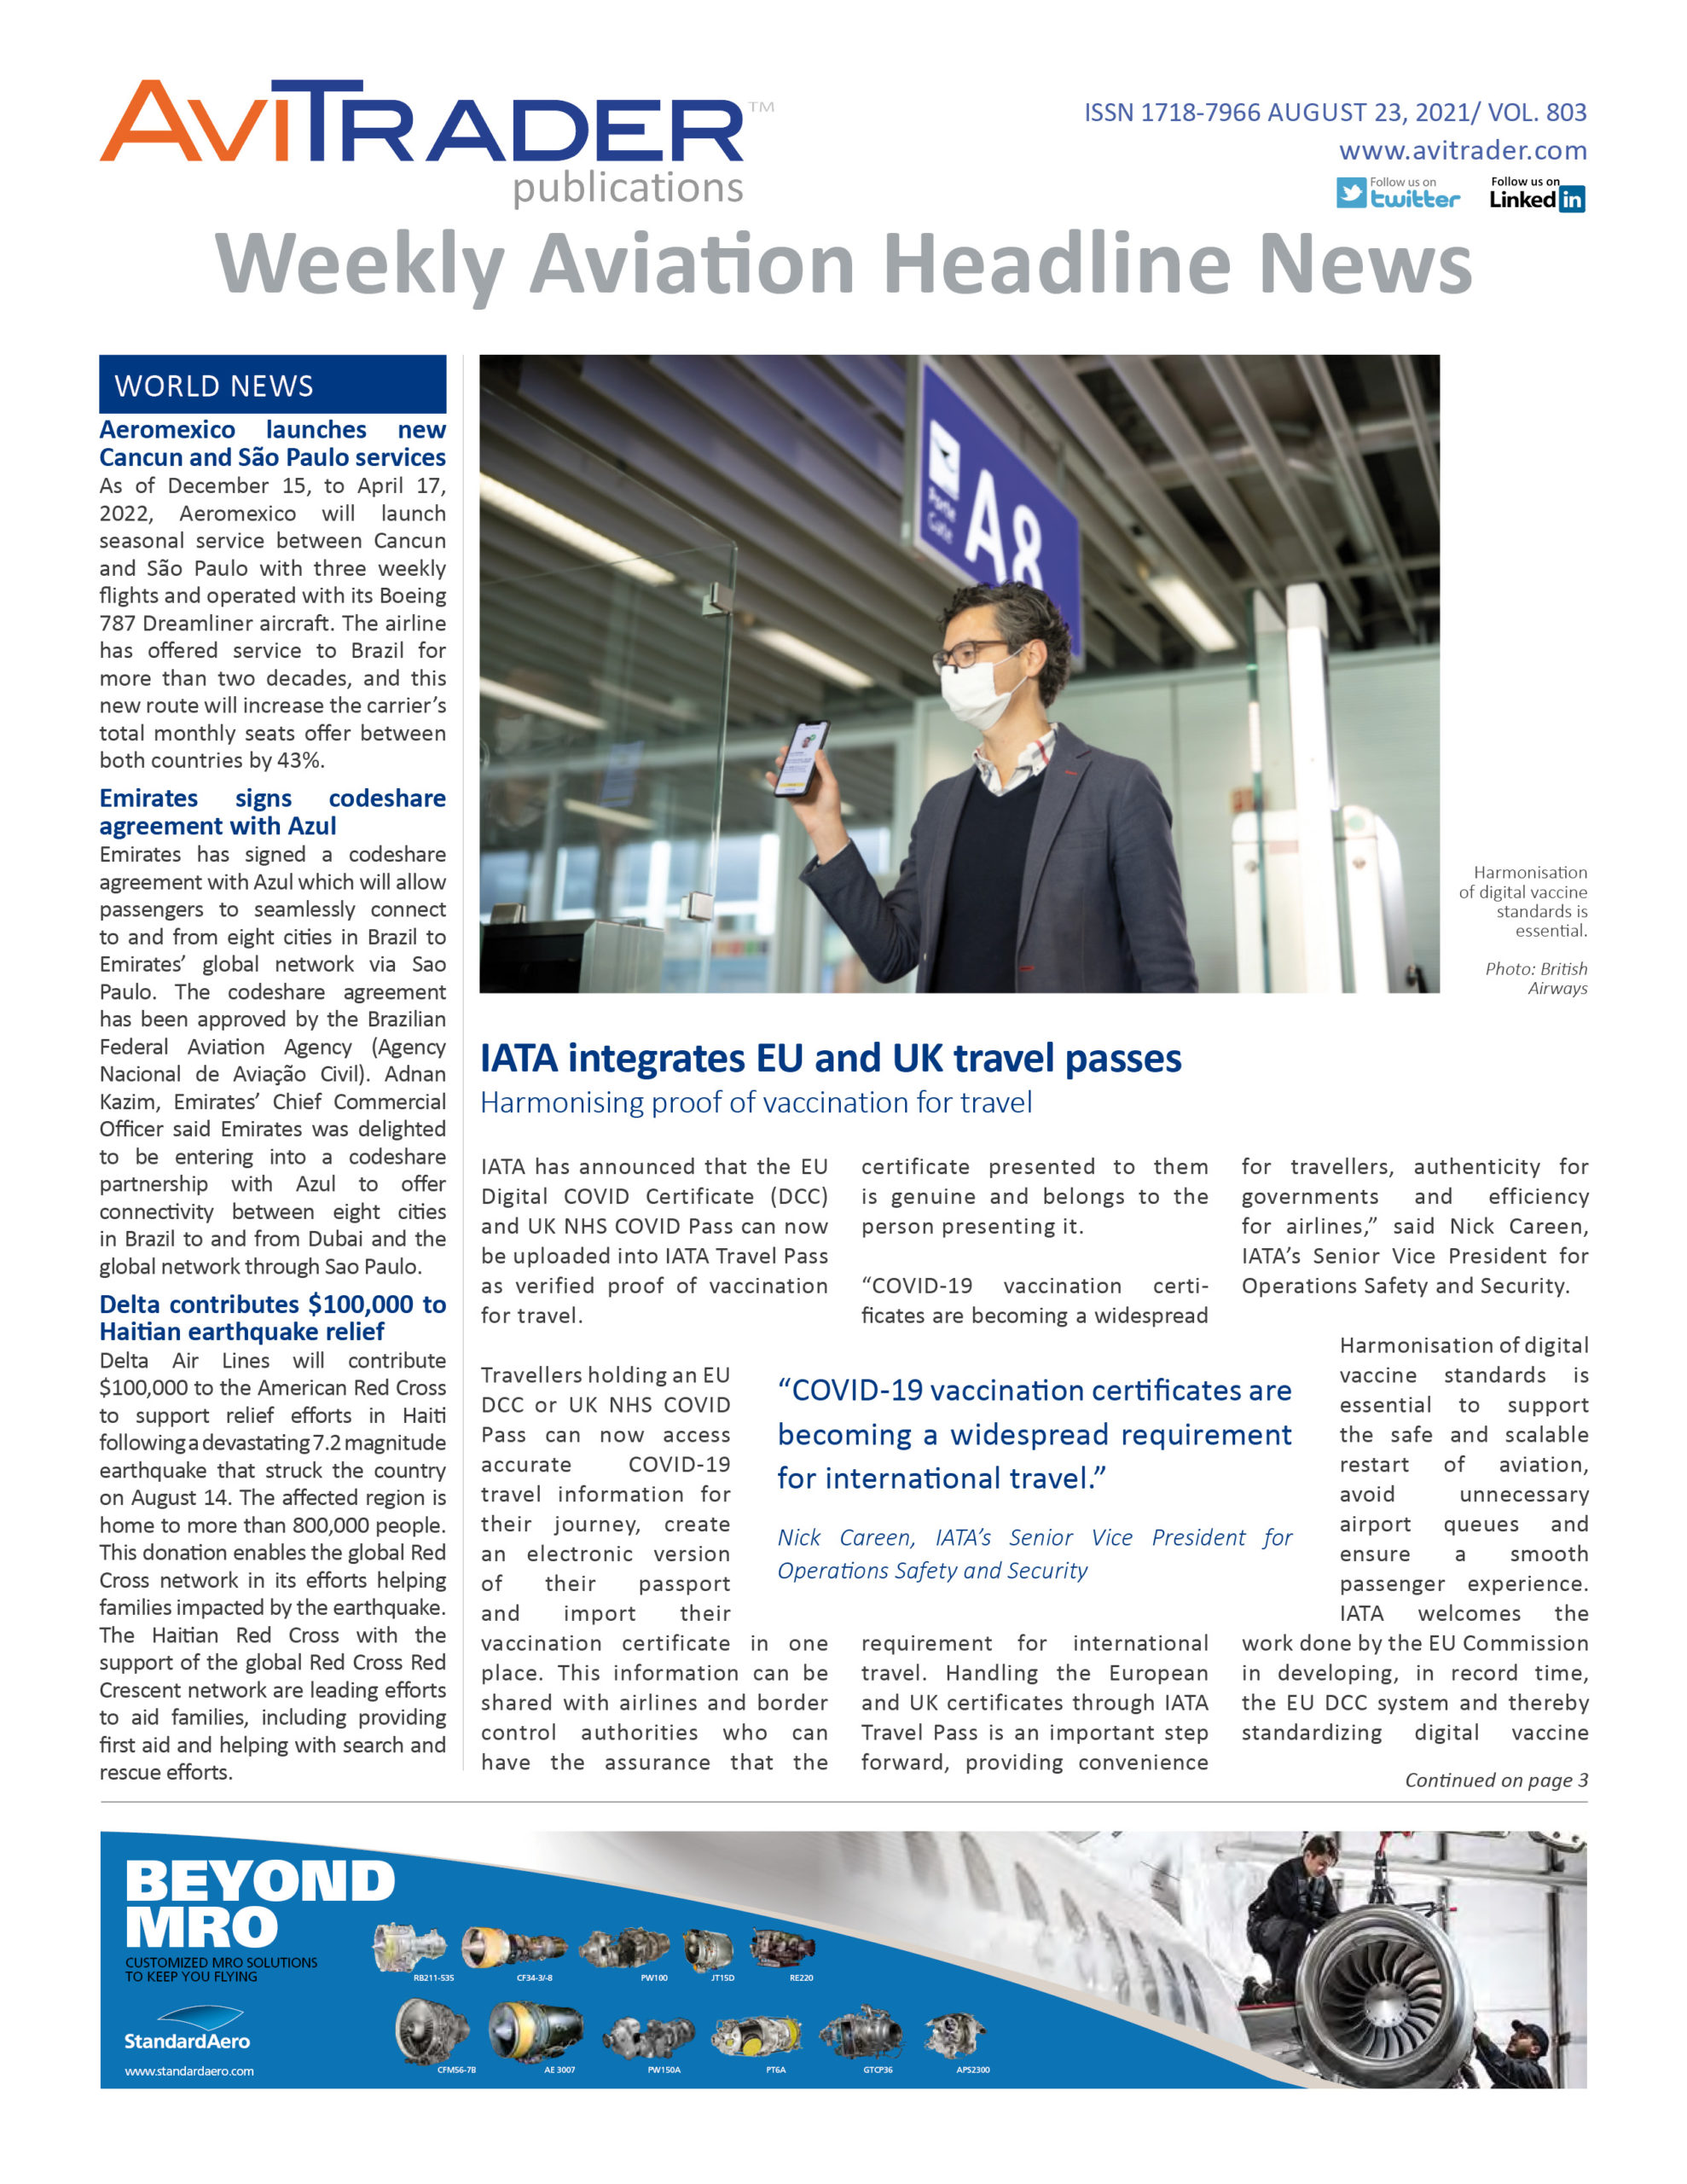 AviTrader_Weekly_Headline_News_Cover_2021-08-23